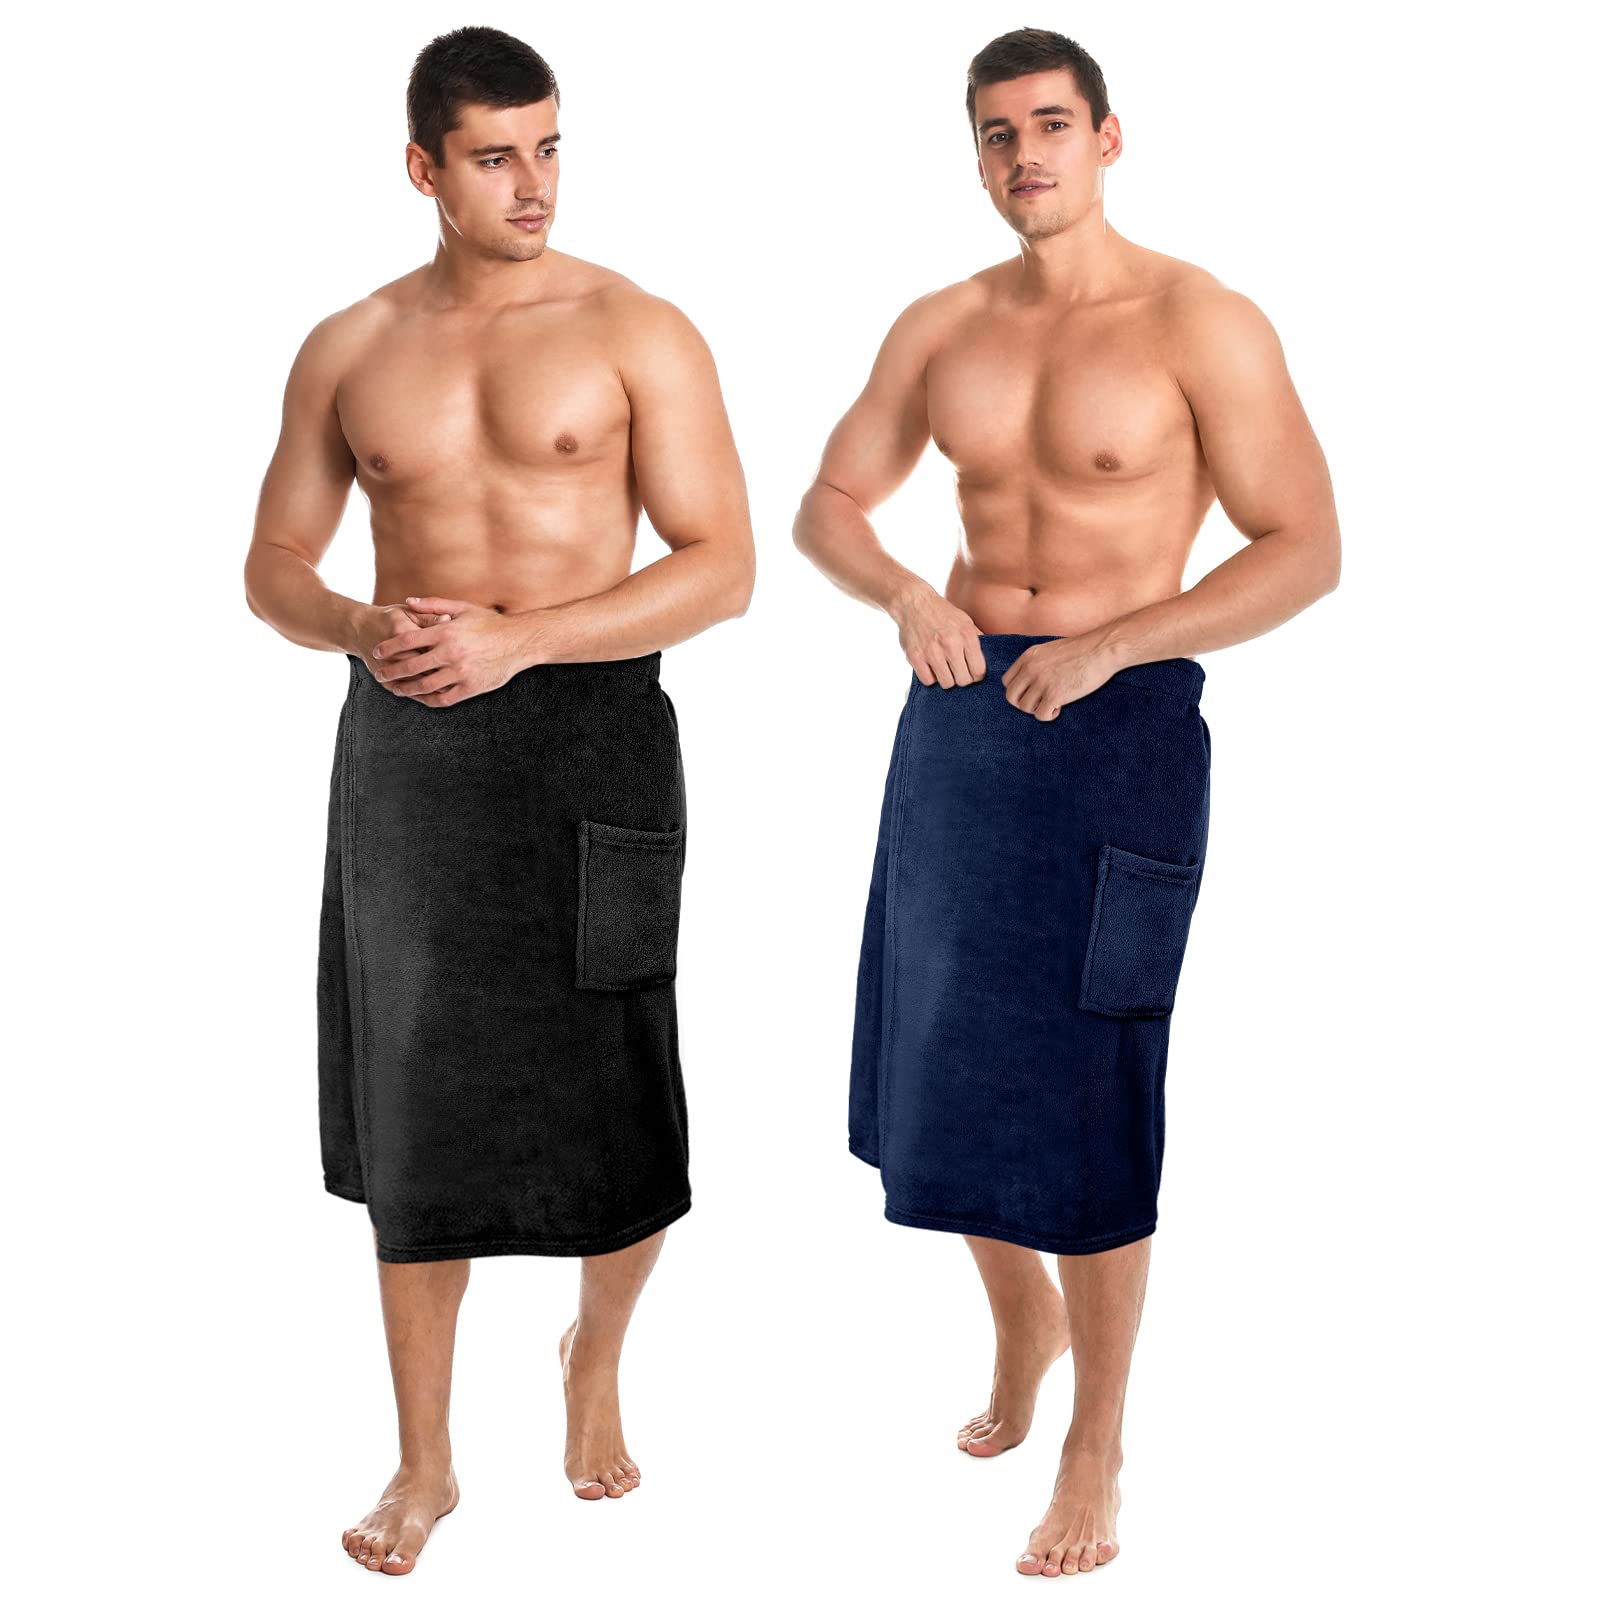 Tudomro 2 Pieces Men's Body Wrap Towel Adjustable Sauna Towels Spa Wrap with Pocket After Shower Wrap Terry Bath Towels Bath Wra